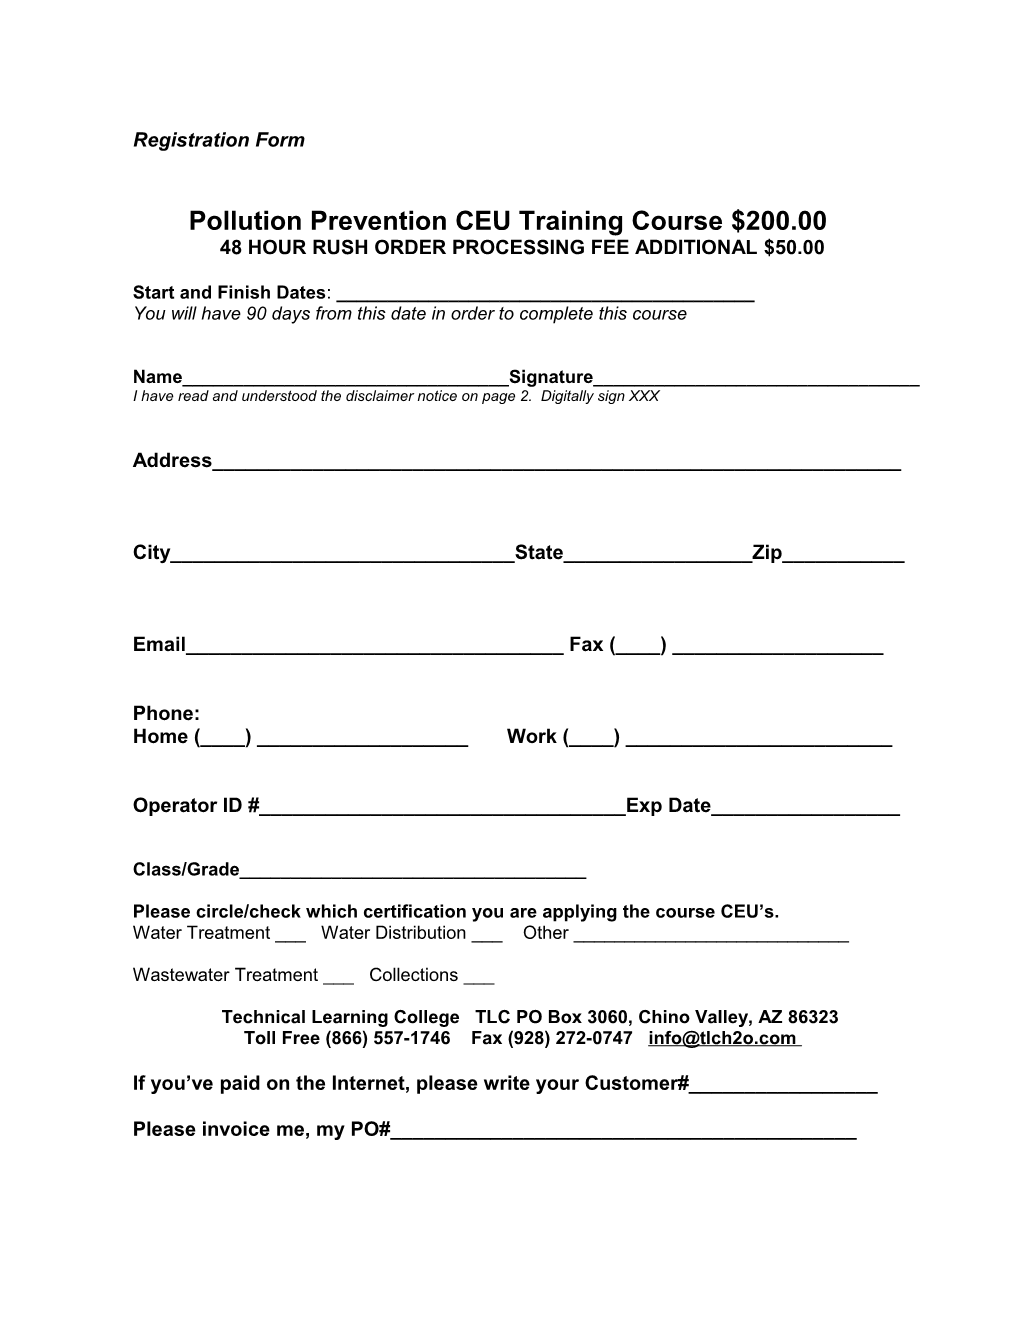 Pollution Prevention CEU Training Course $200.00